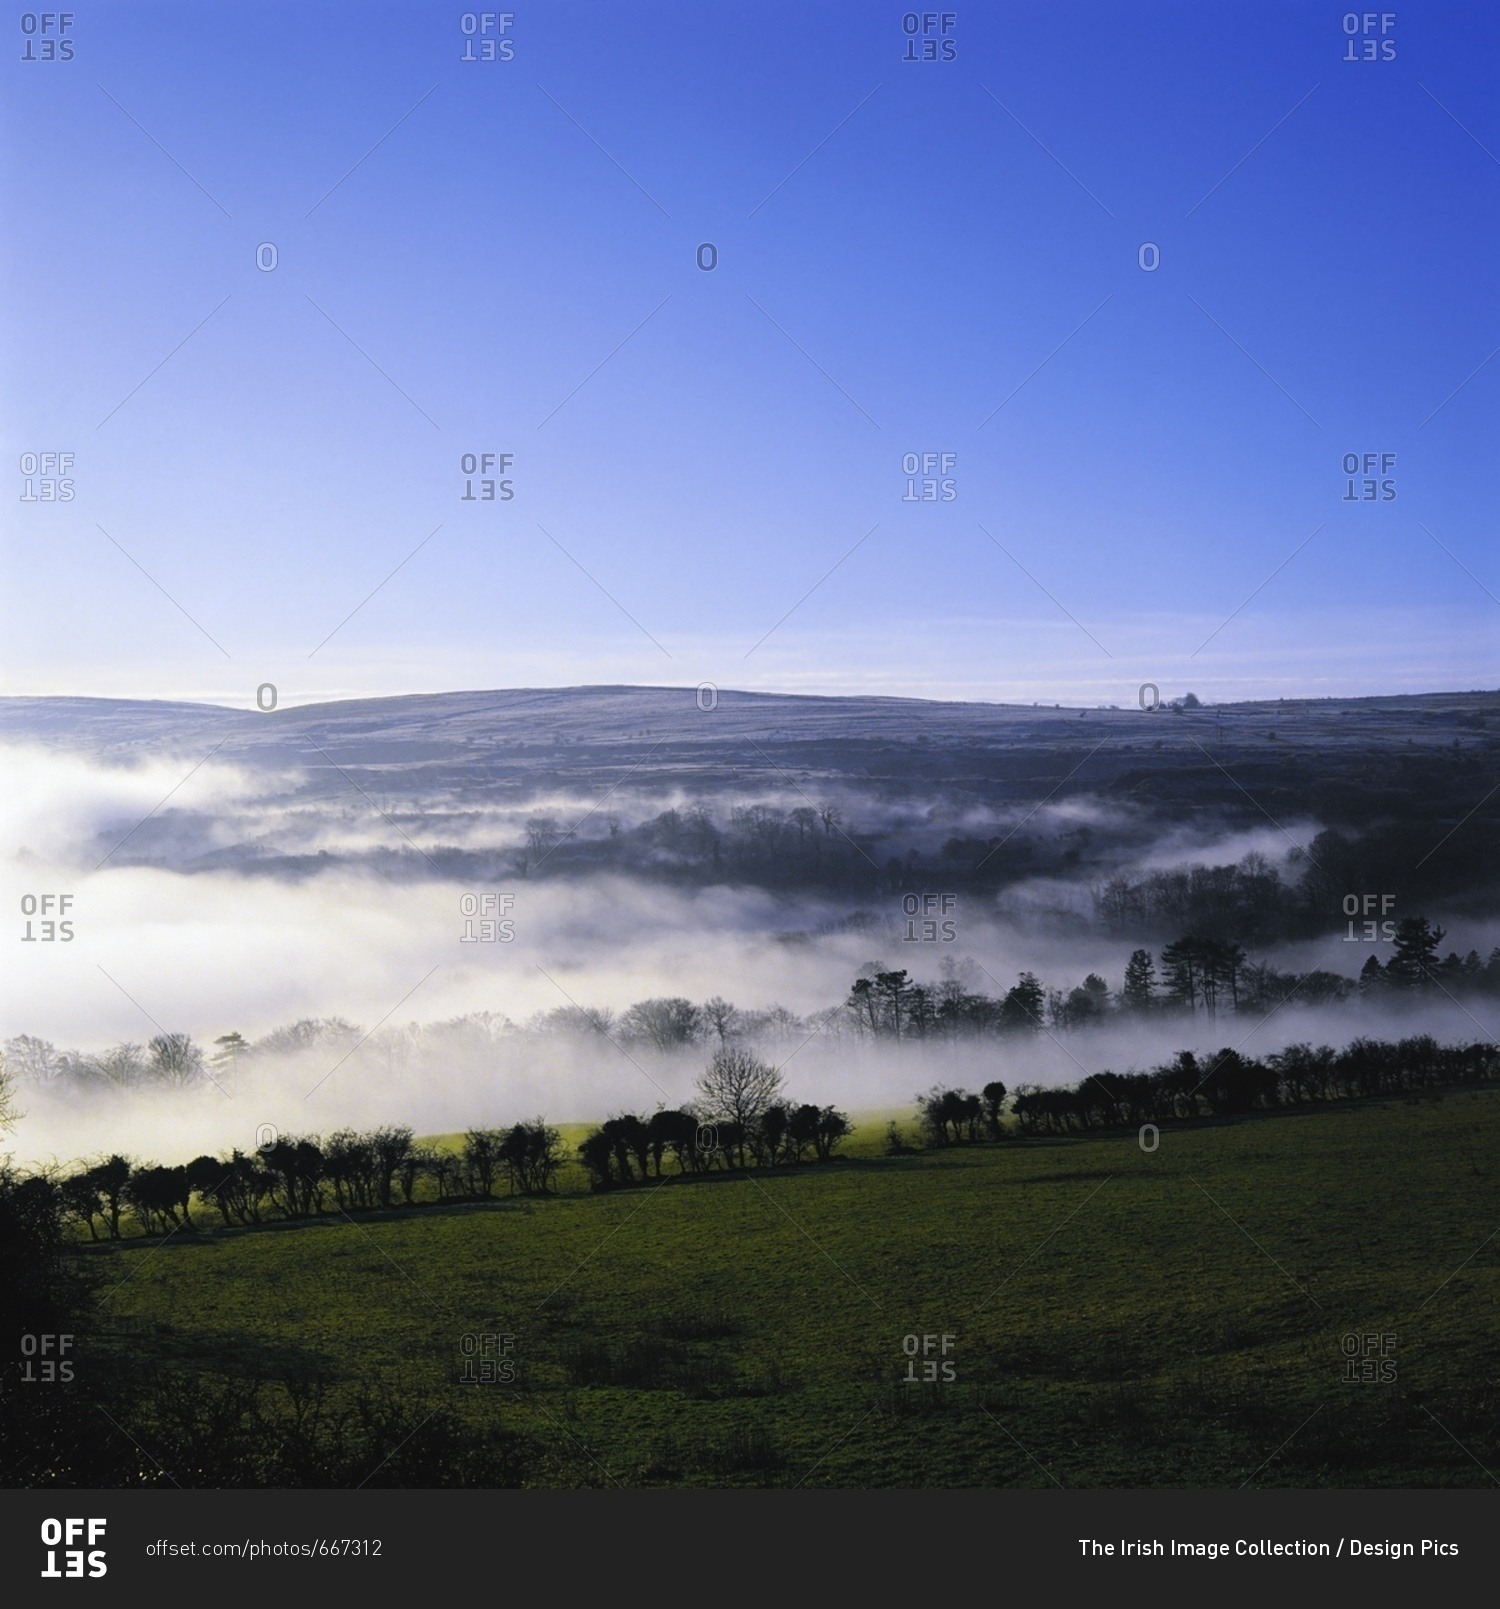 June 13, 2007: Co Antrim, Ireland; Mist Over A Landscape